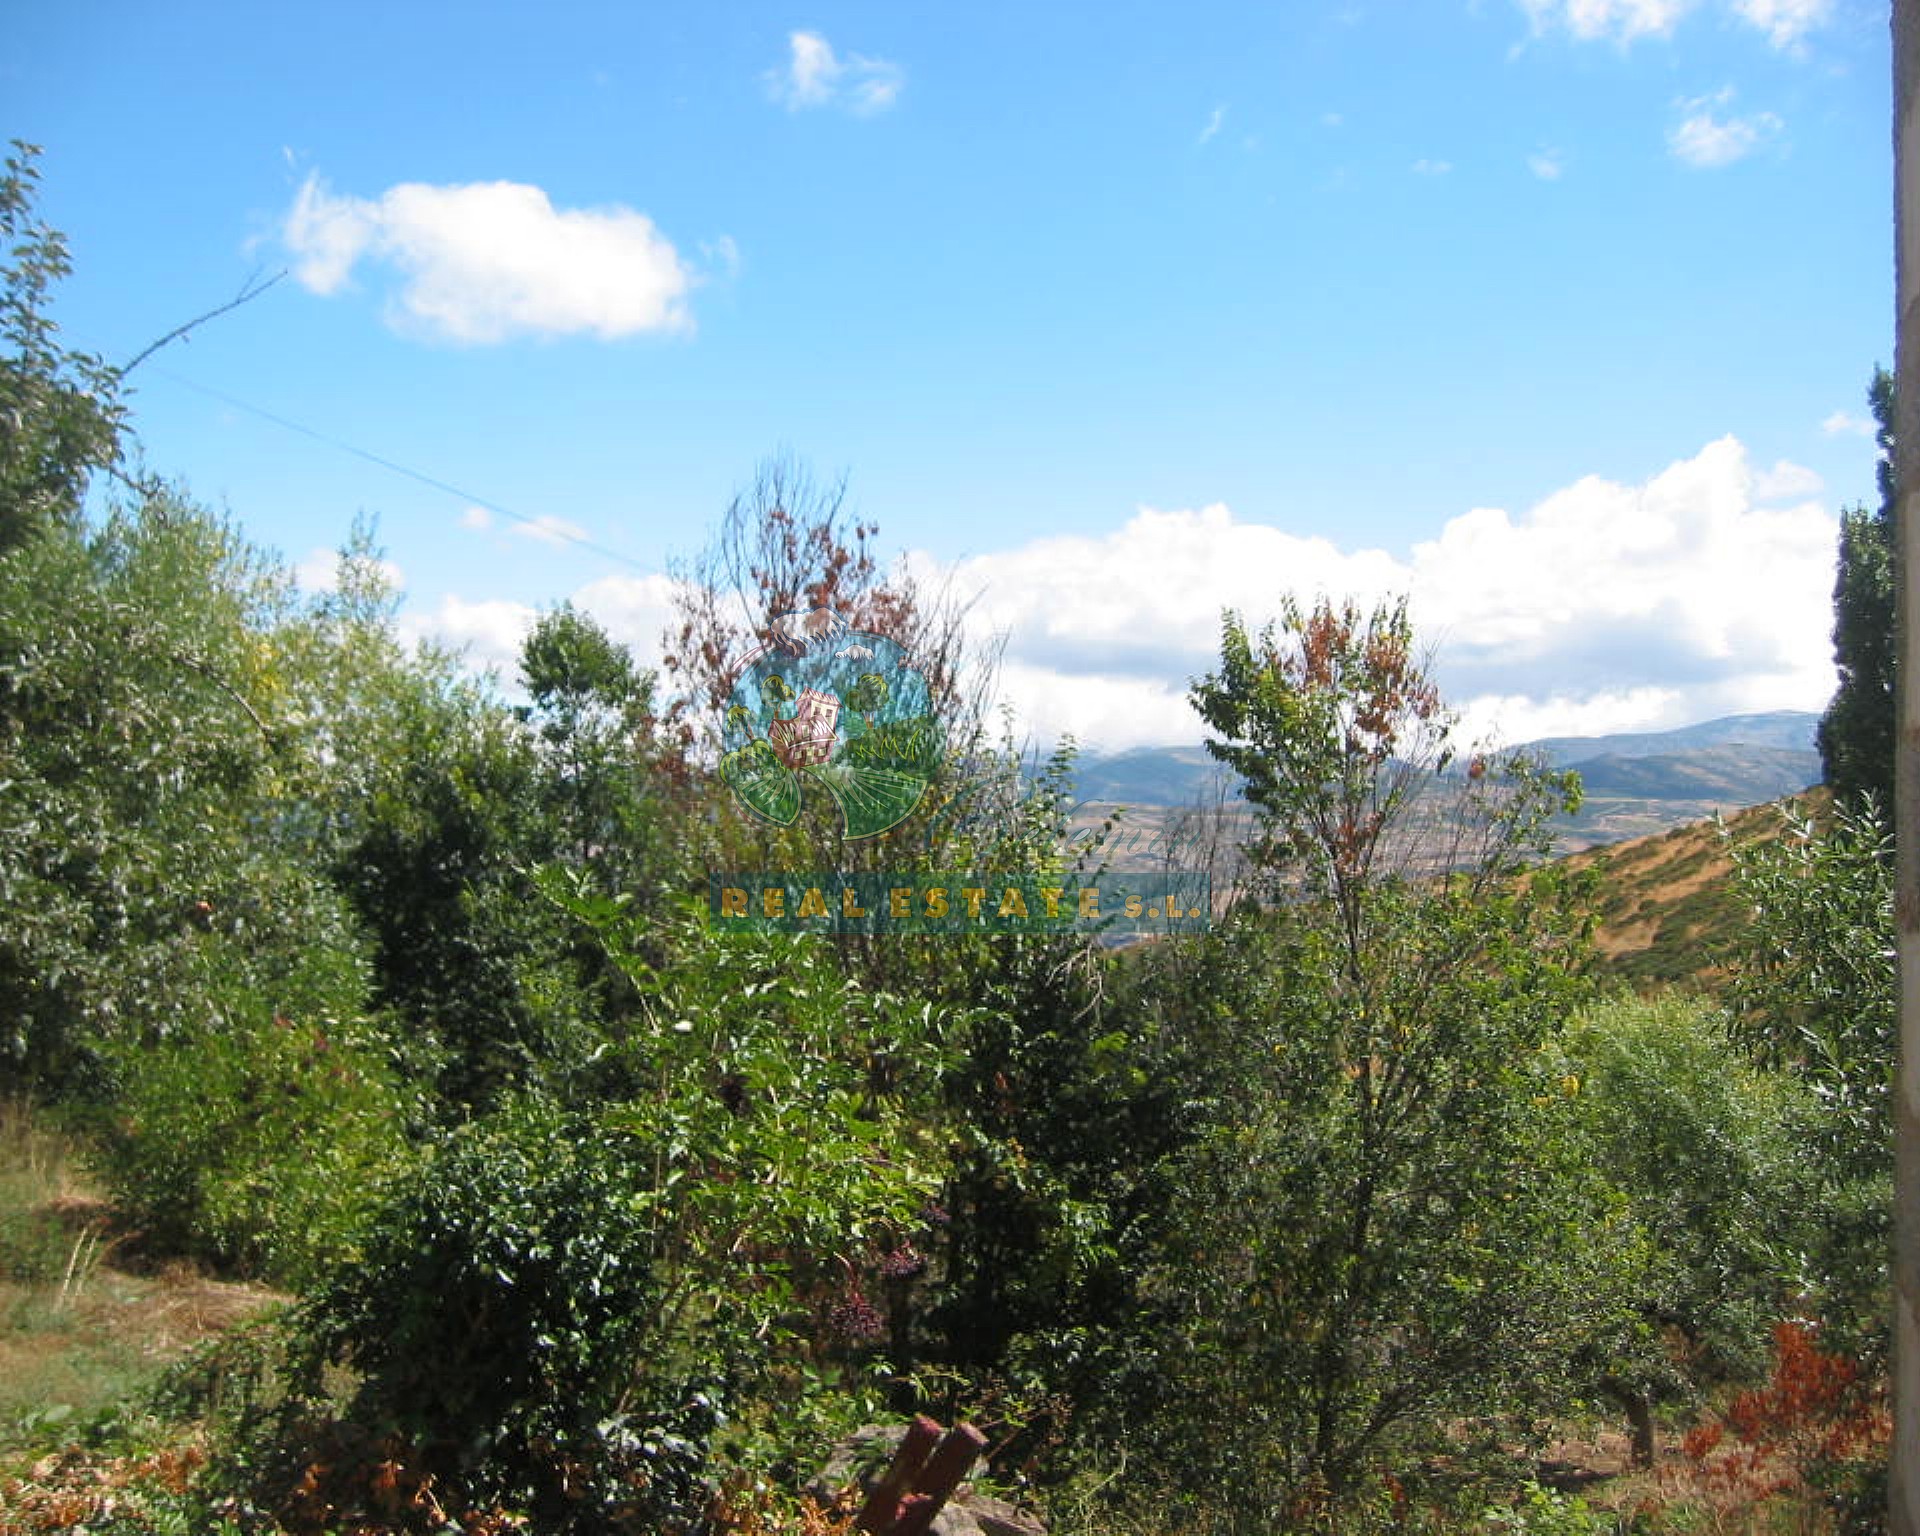 En Sierra de Gredos.